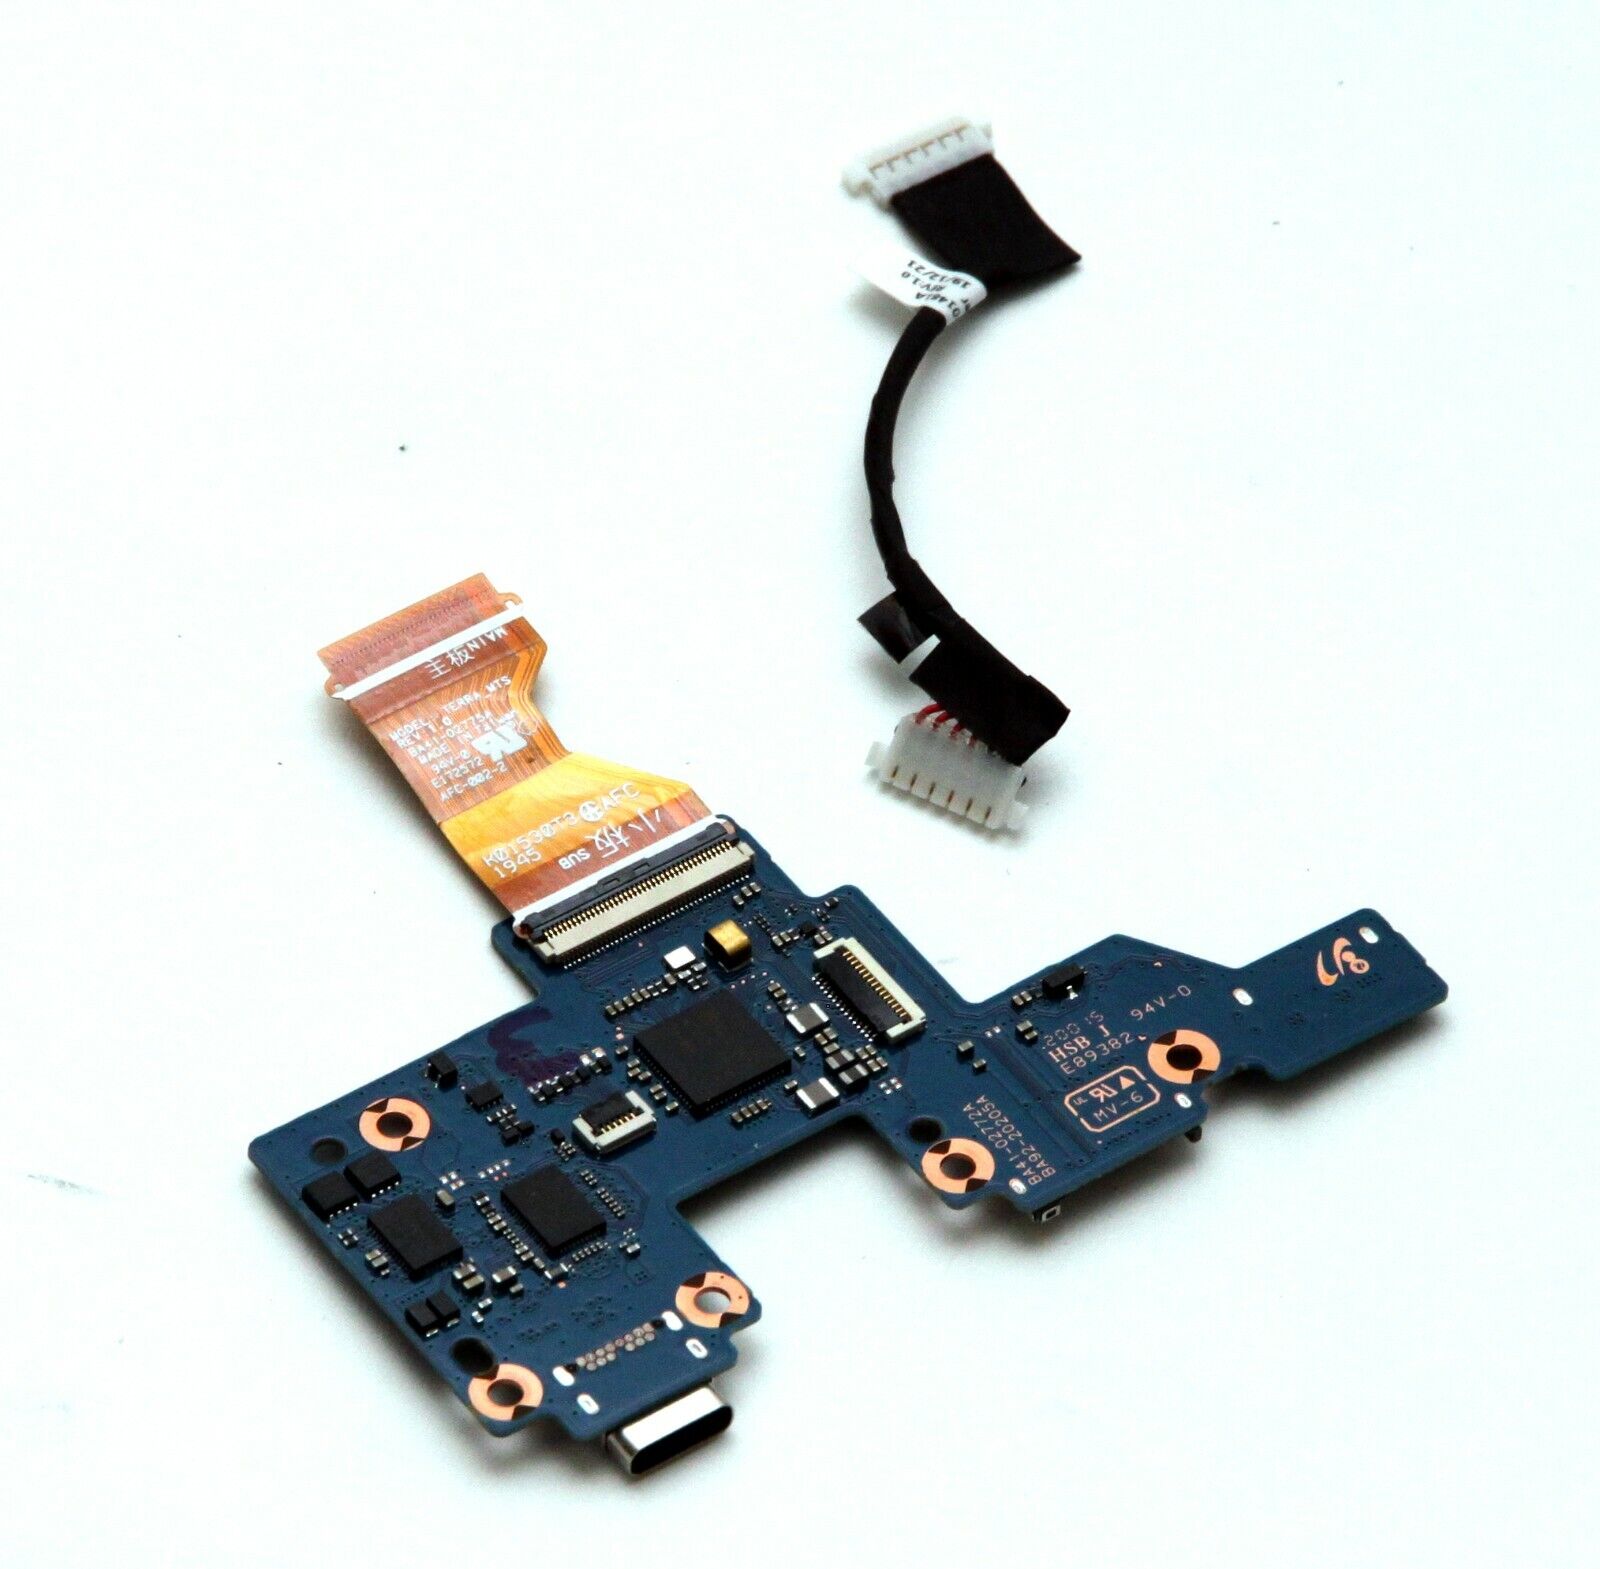  BA41-02772A BA92-20205A GENUINE SAMSUNG USB BOARD W CABLE XE930QCA